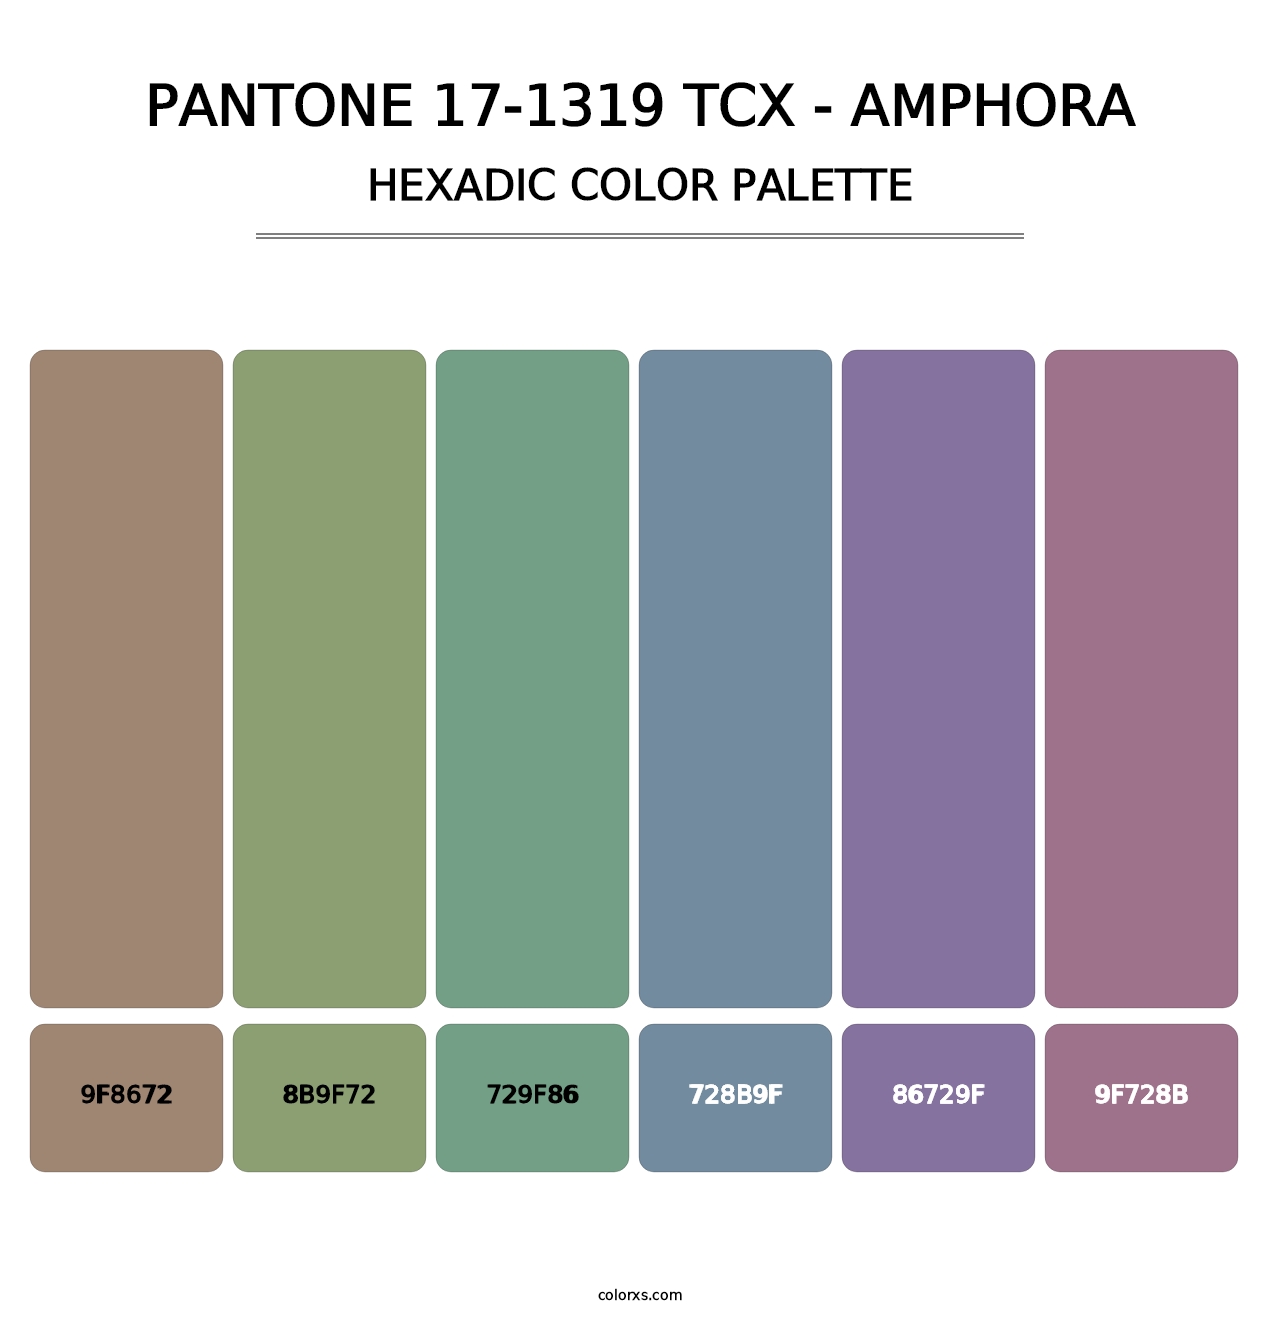 PANTONE 17-1319 TCX - Amphora - Hexadic Color Palette